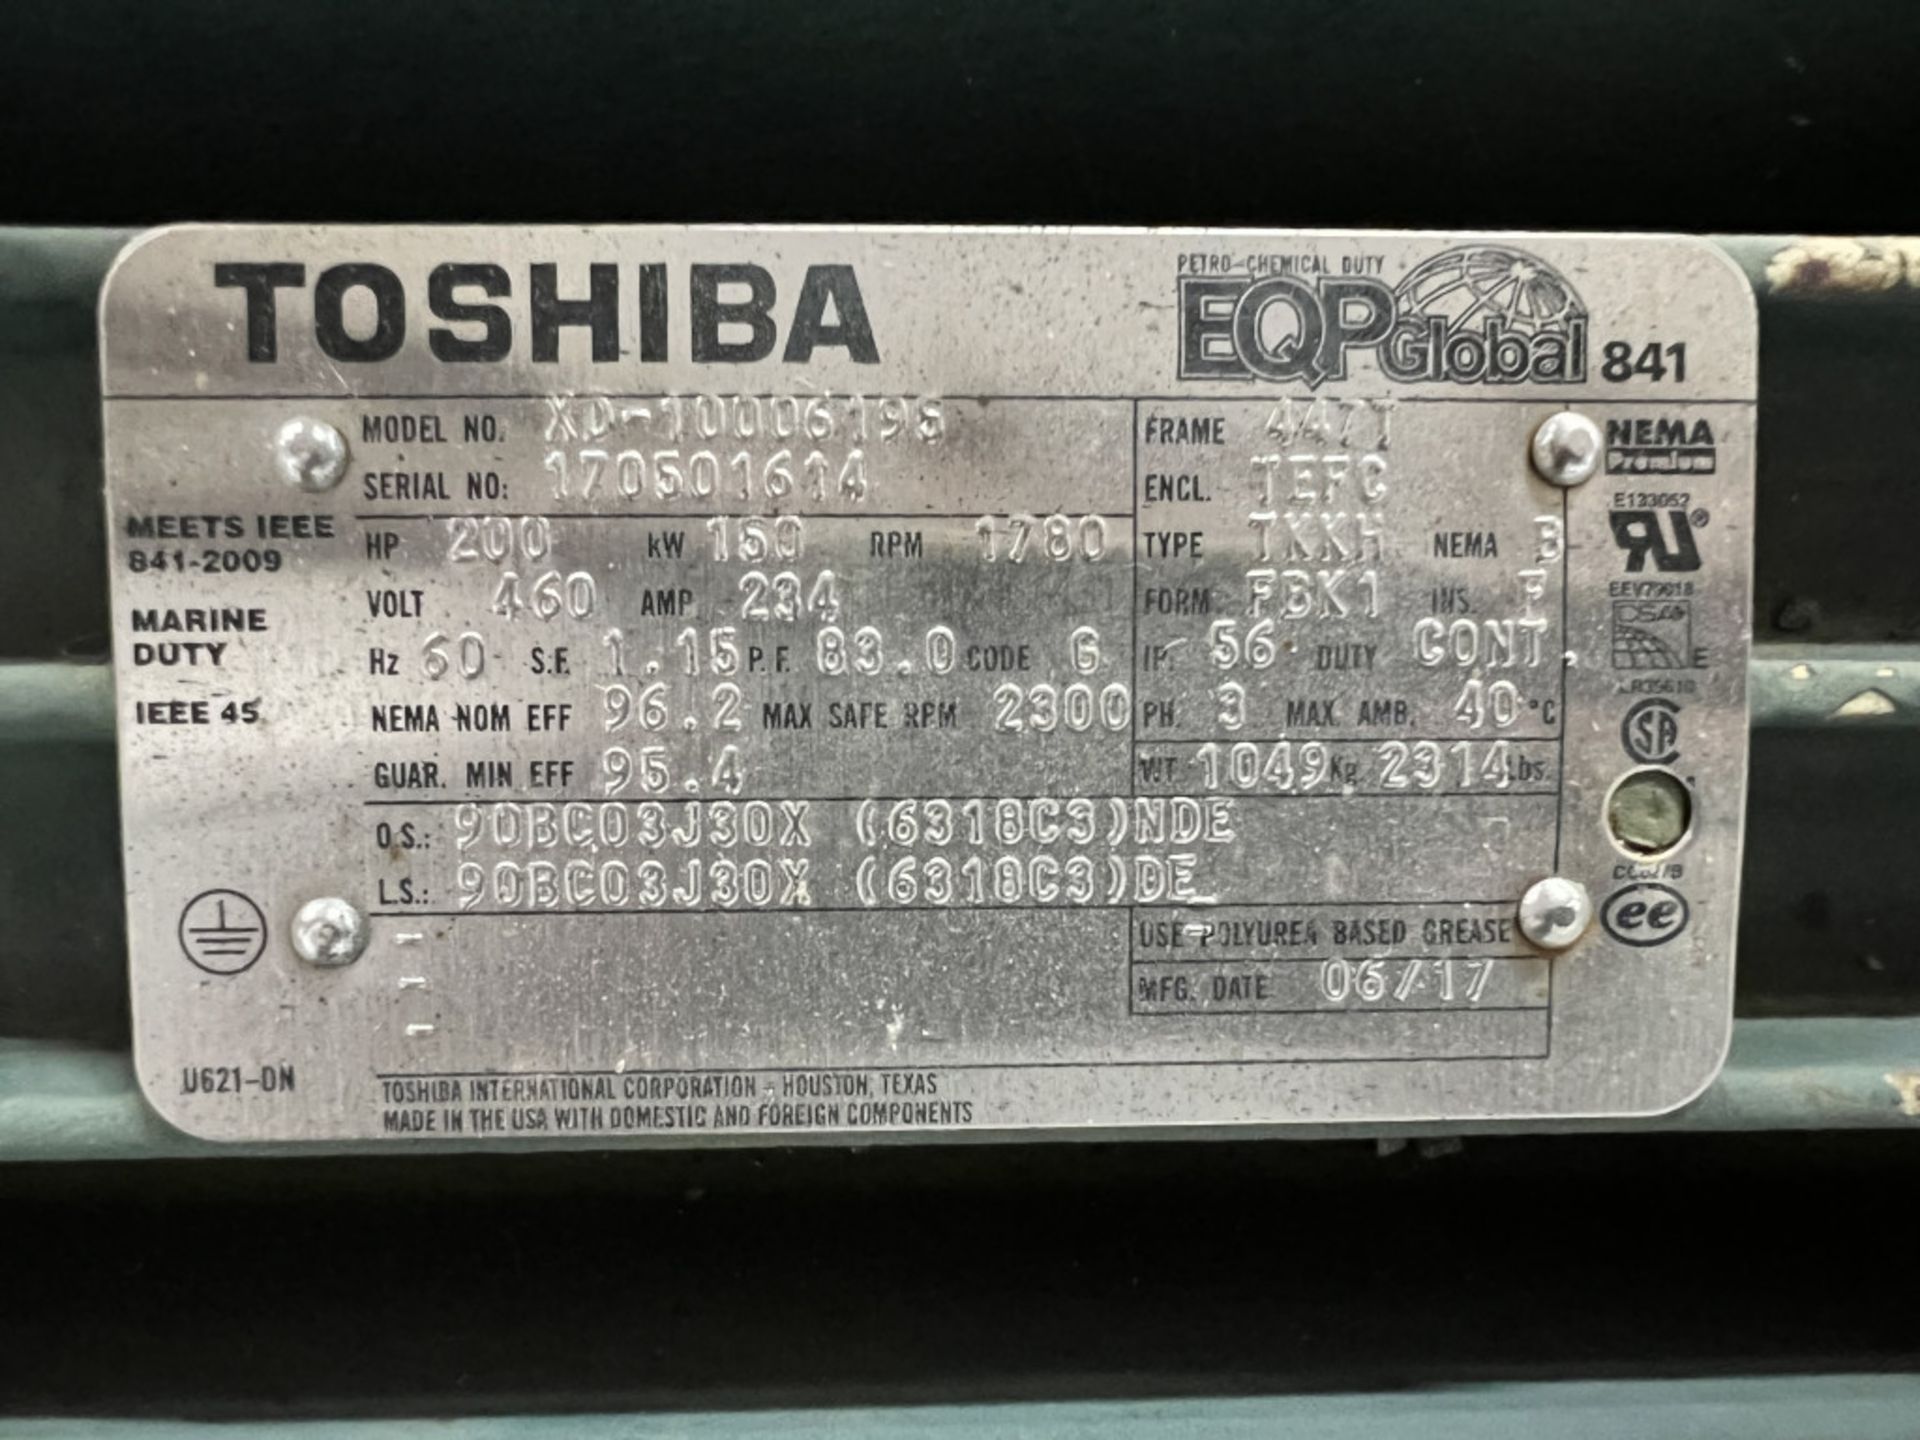 Toshiba 200 HP Motor | Model No. XD-10006195; 200 HP; 460V; 1780 RPM; Tag: 246074 - Image 4 of 4